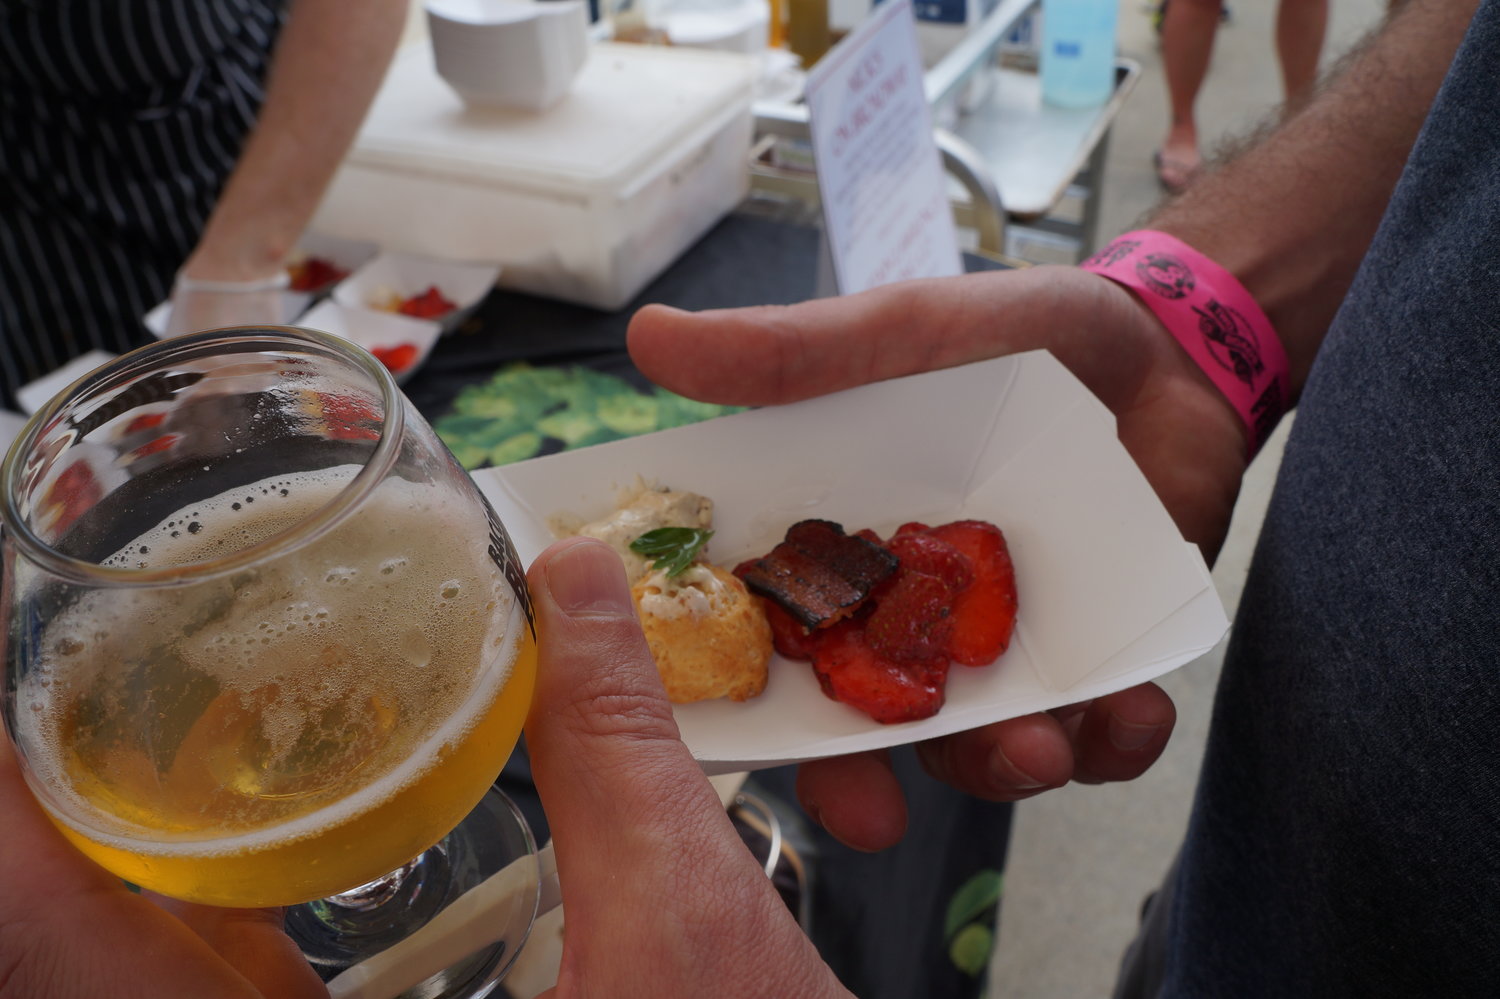 June 16: Bacon & Beer Fest